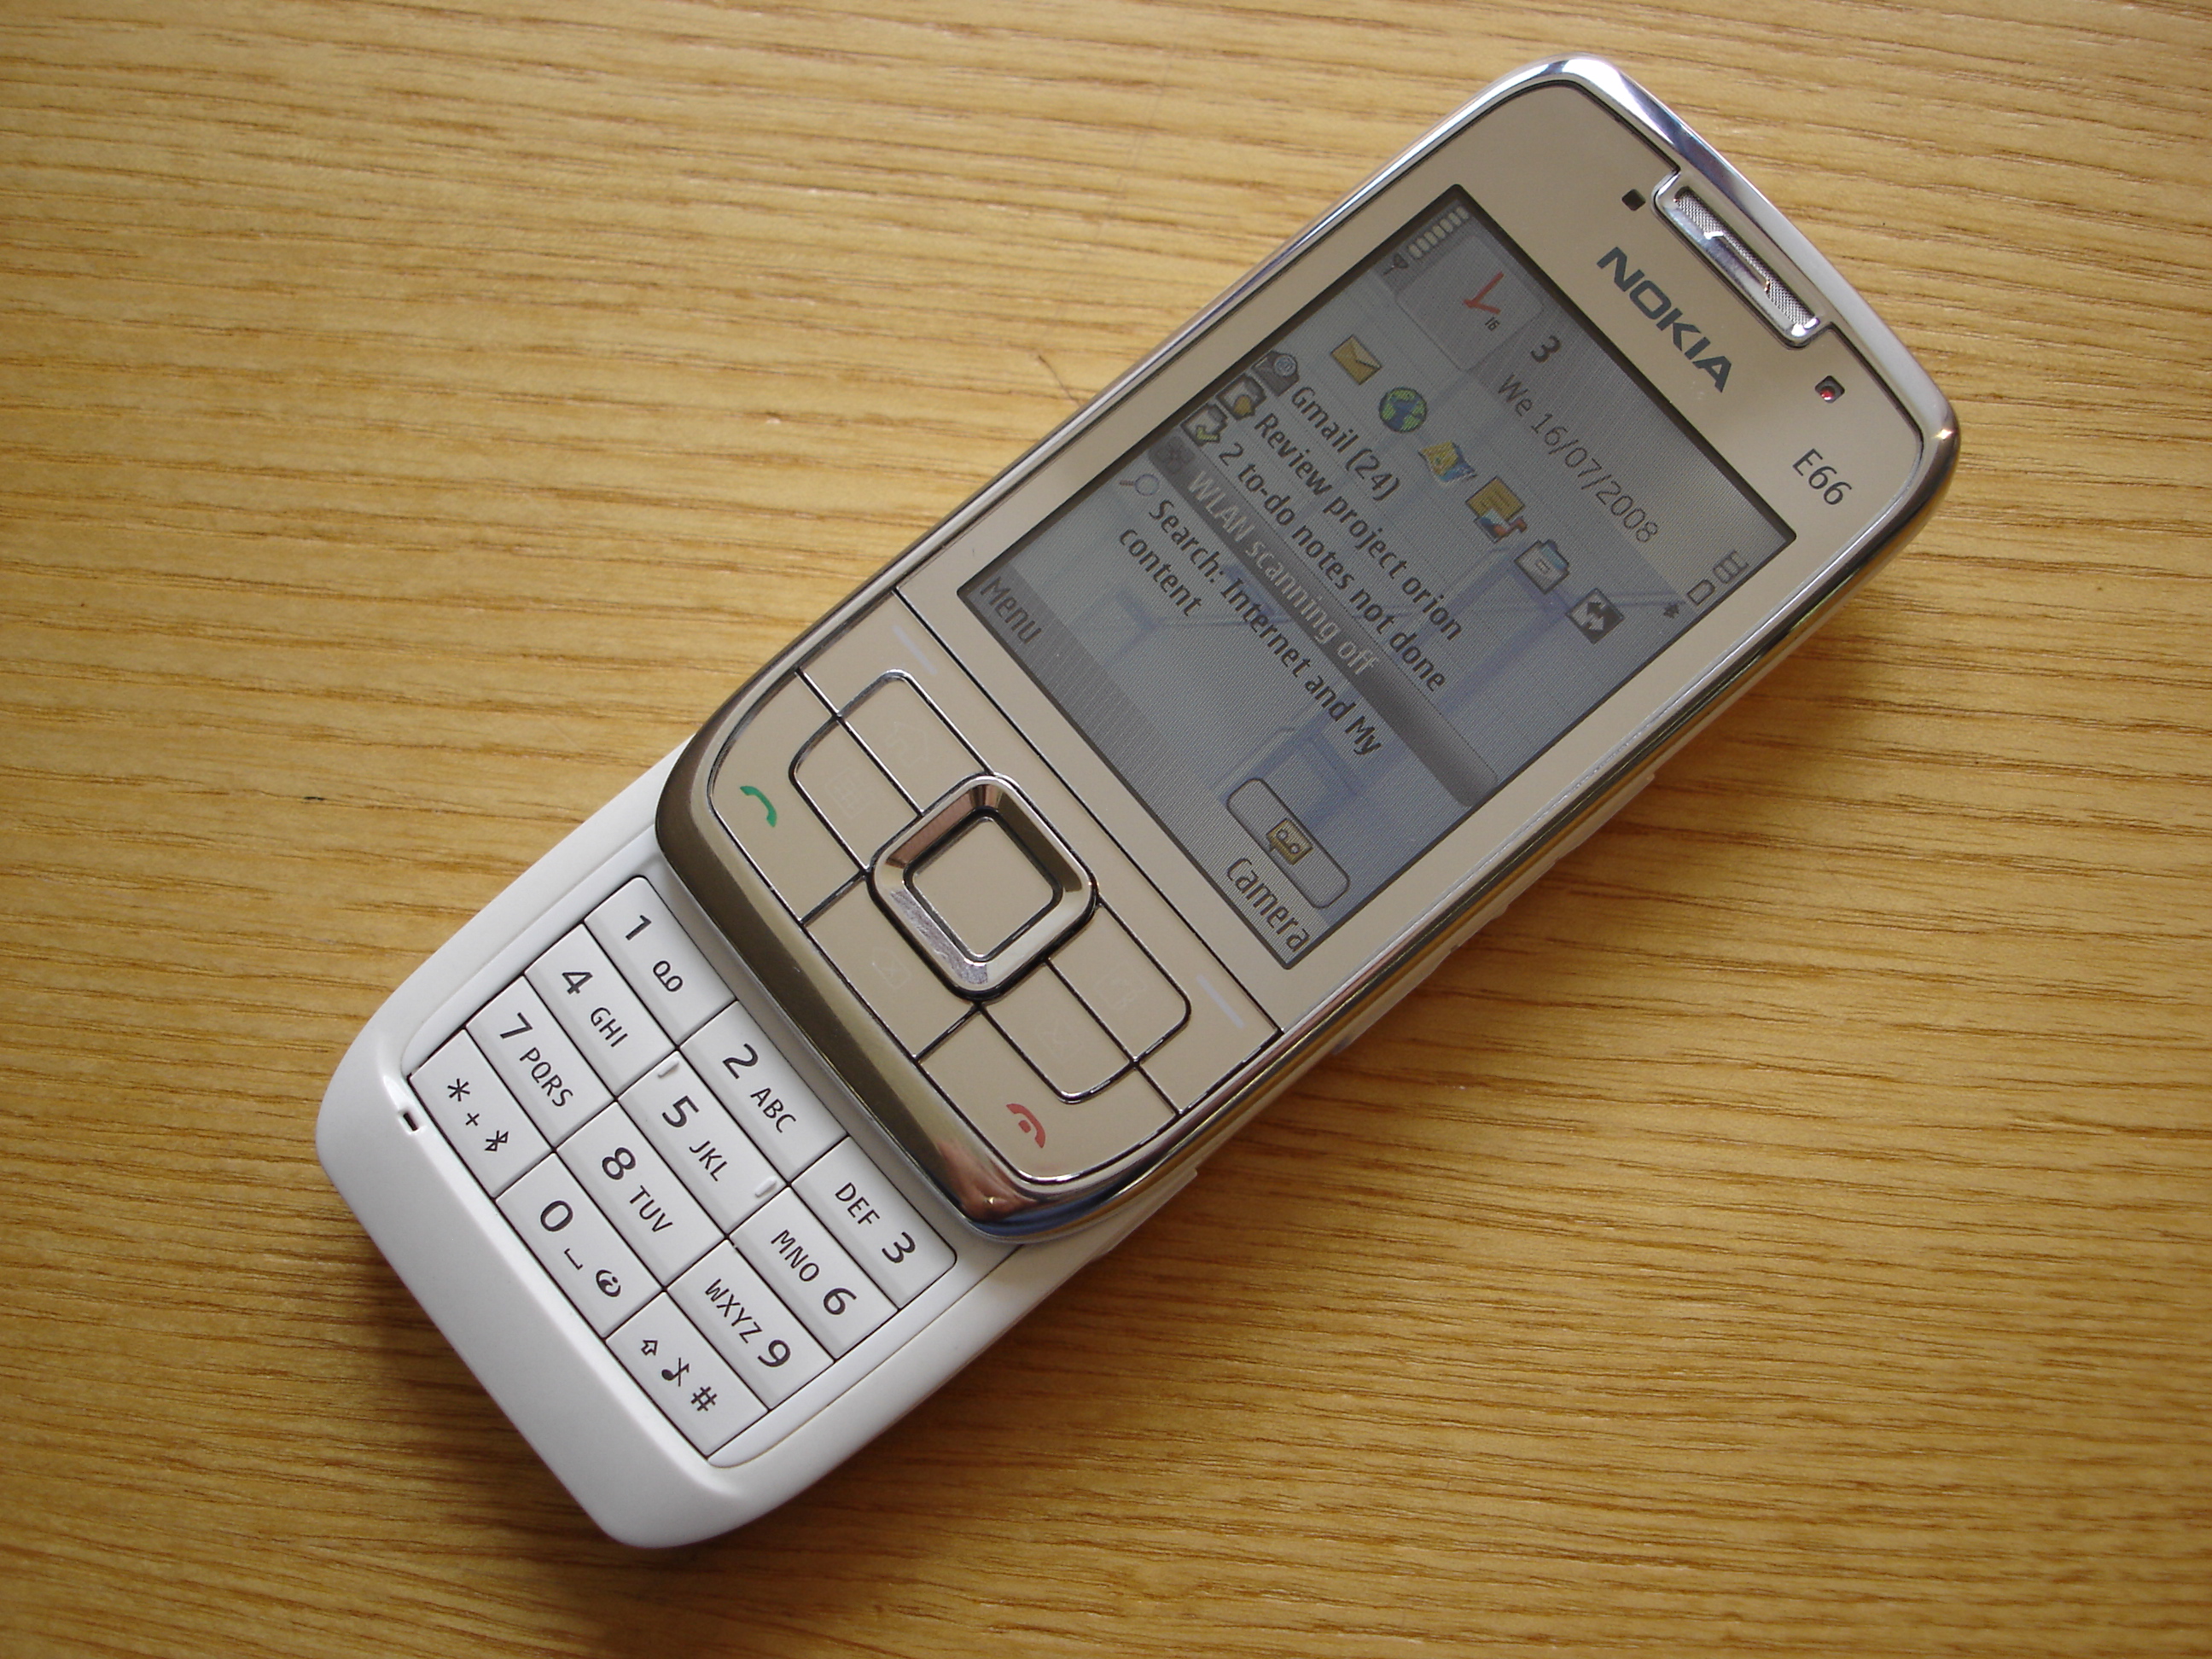 Nokia E66 - Part 1 (Design, Hardware, Connectivity, PIM) review - All About  Symbian